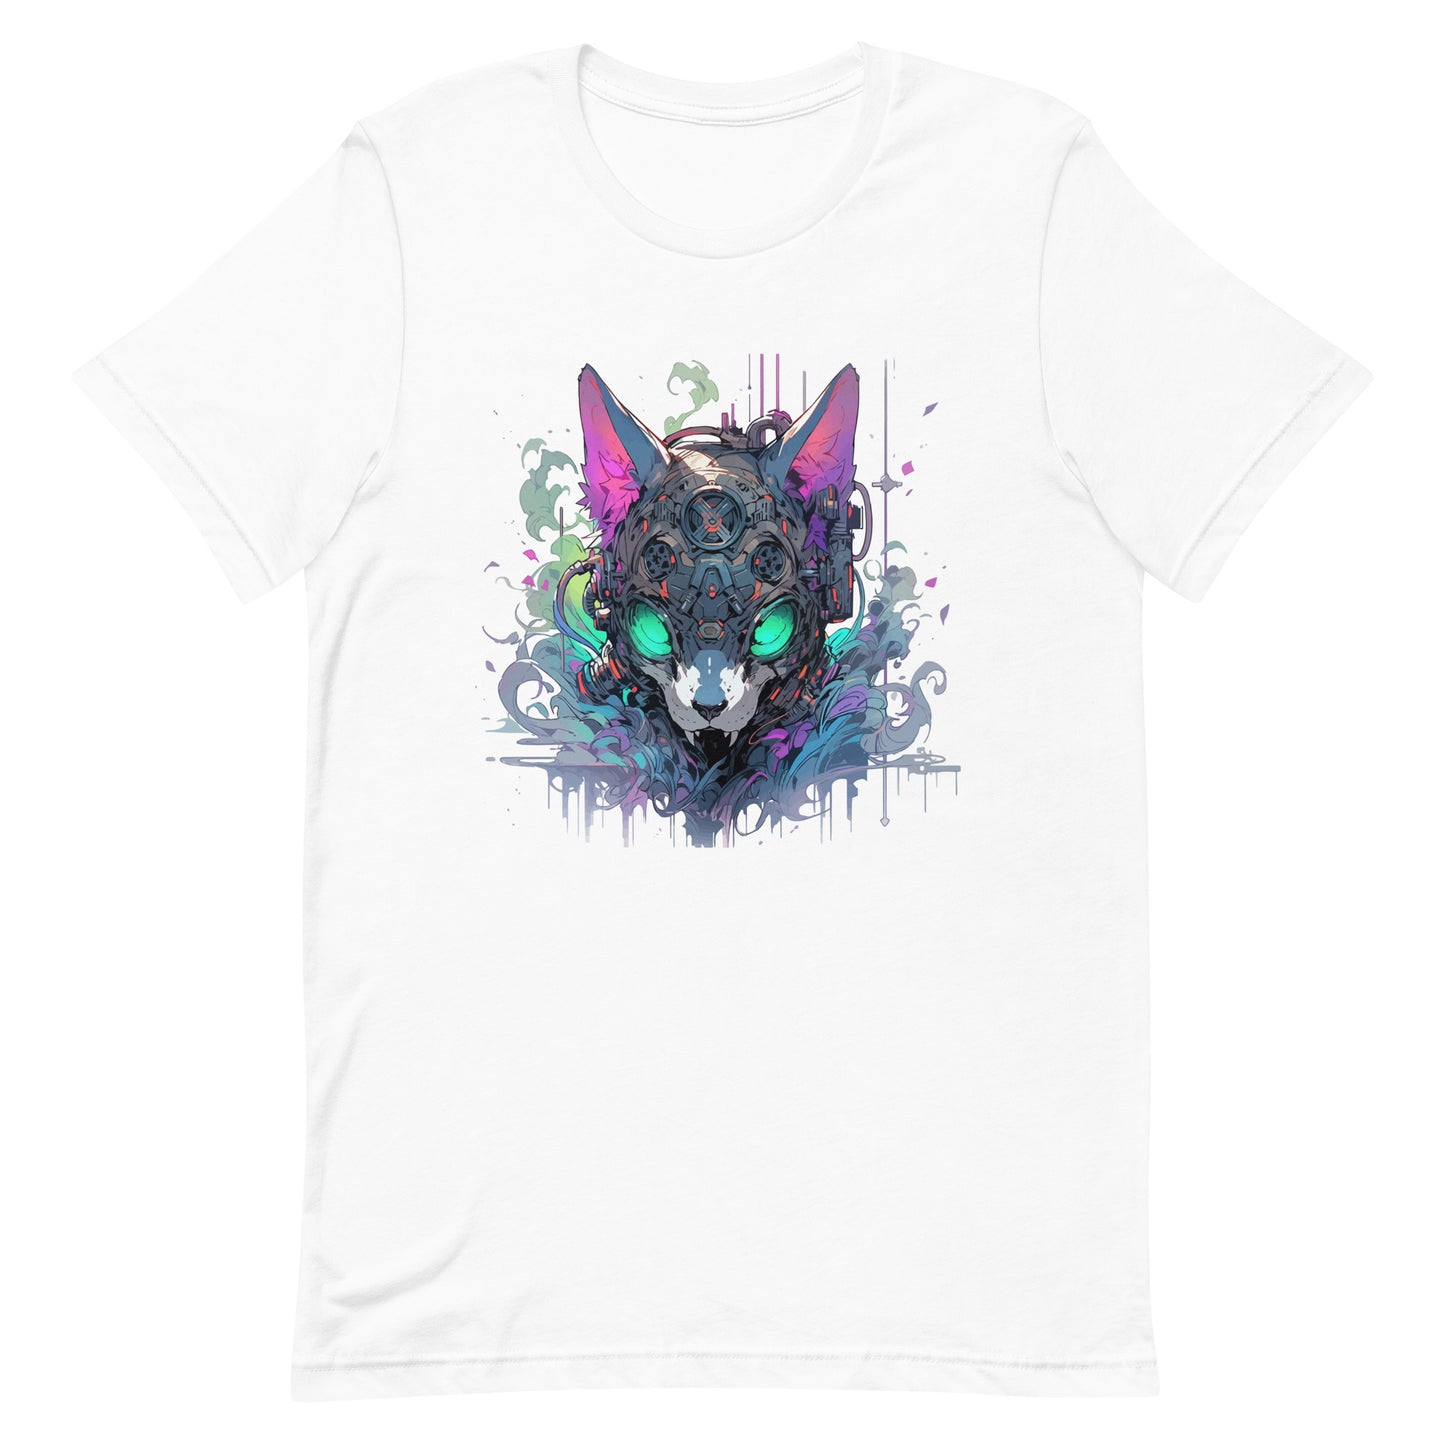 Hissing cyberpunk mutant, Angry toxic cat, Fantastic zombie cyber kitty, Blue eyes wildcat - Unisex t-shirt